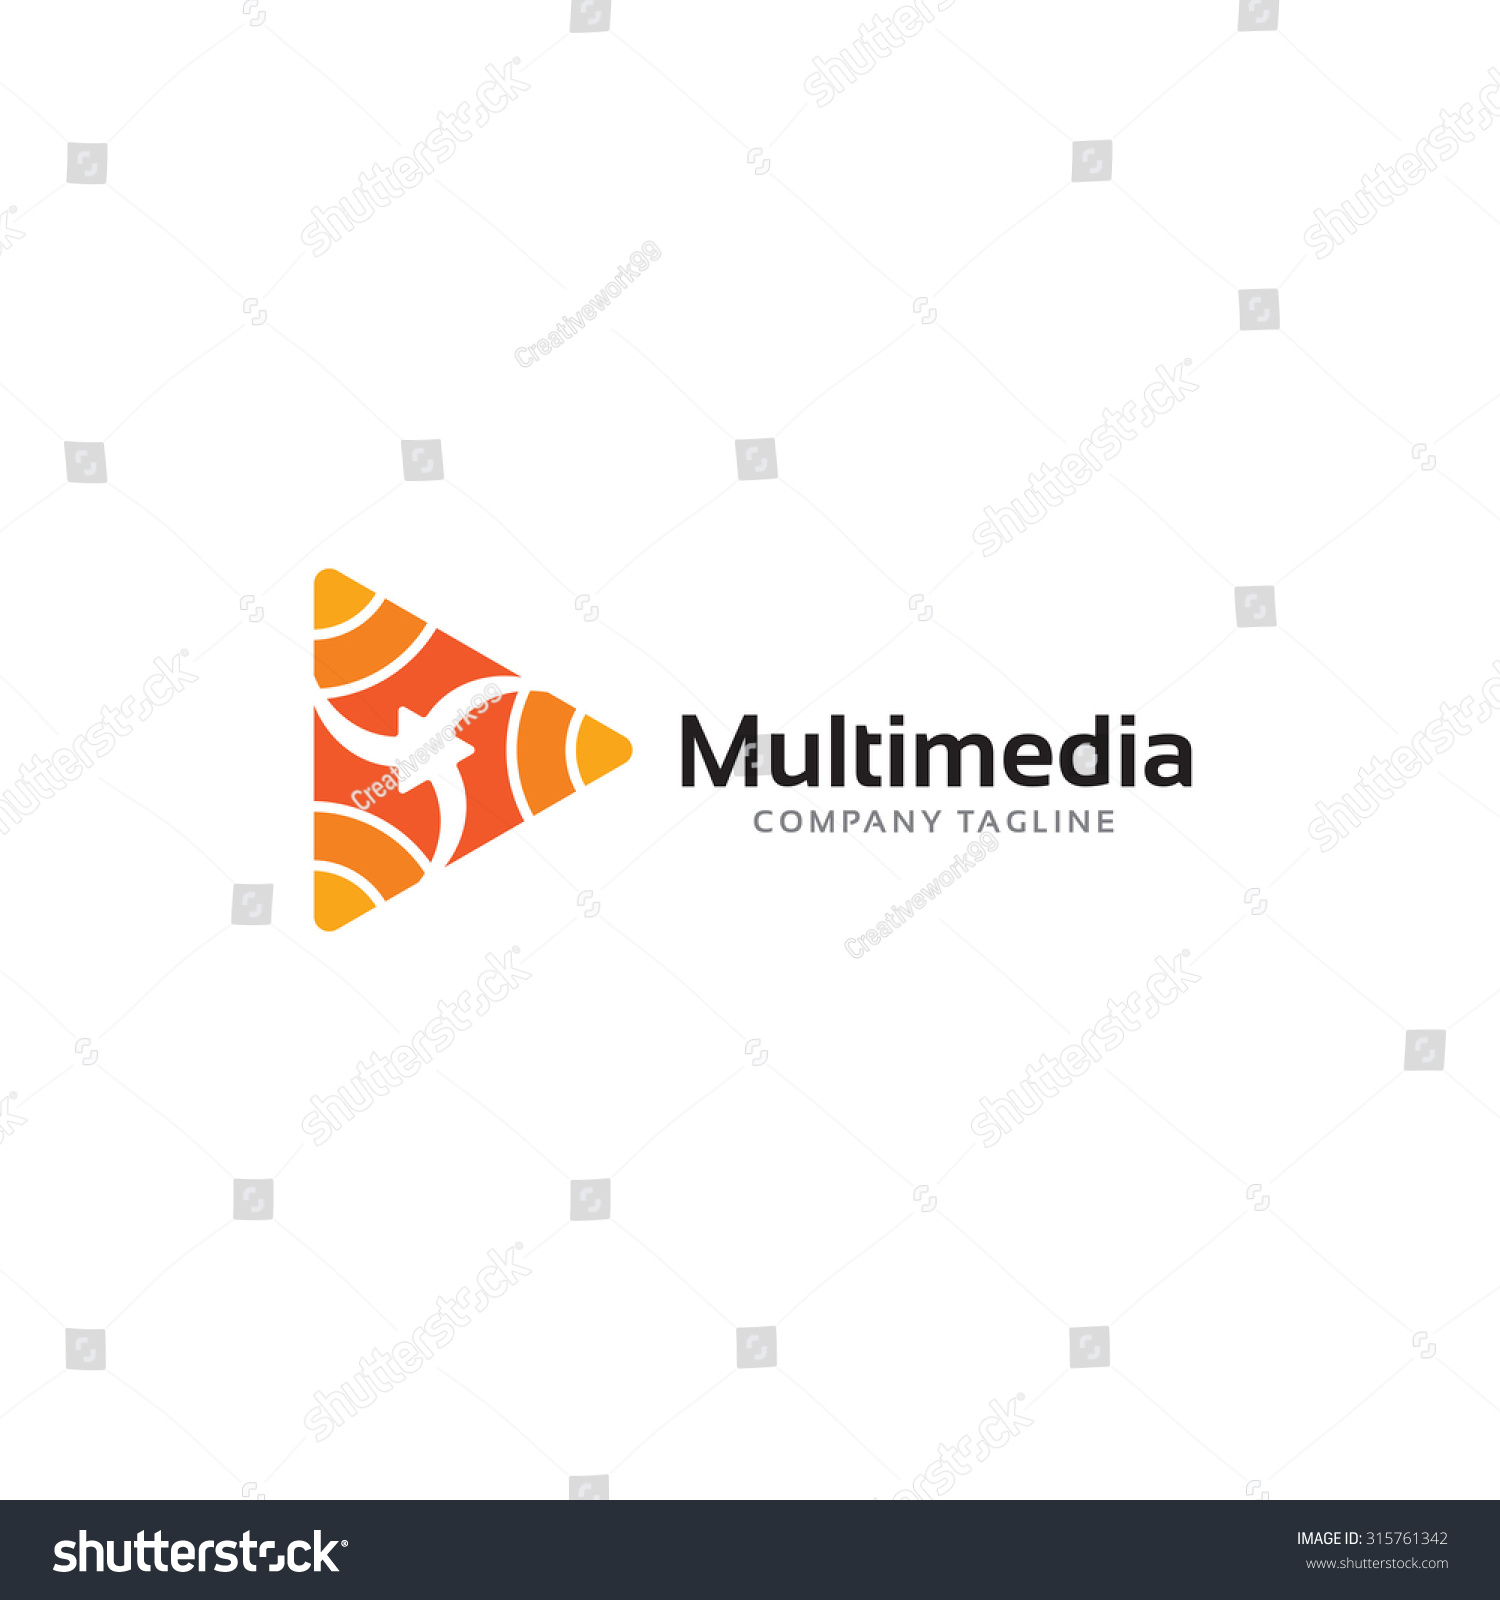 An Attractive Multimedia Vector Logo Symbol. - 315761342 : Shutterstock